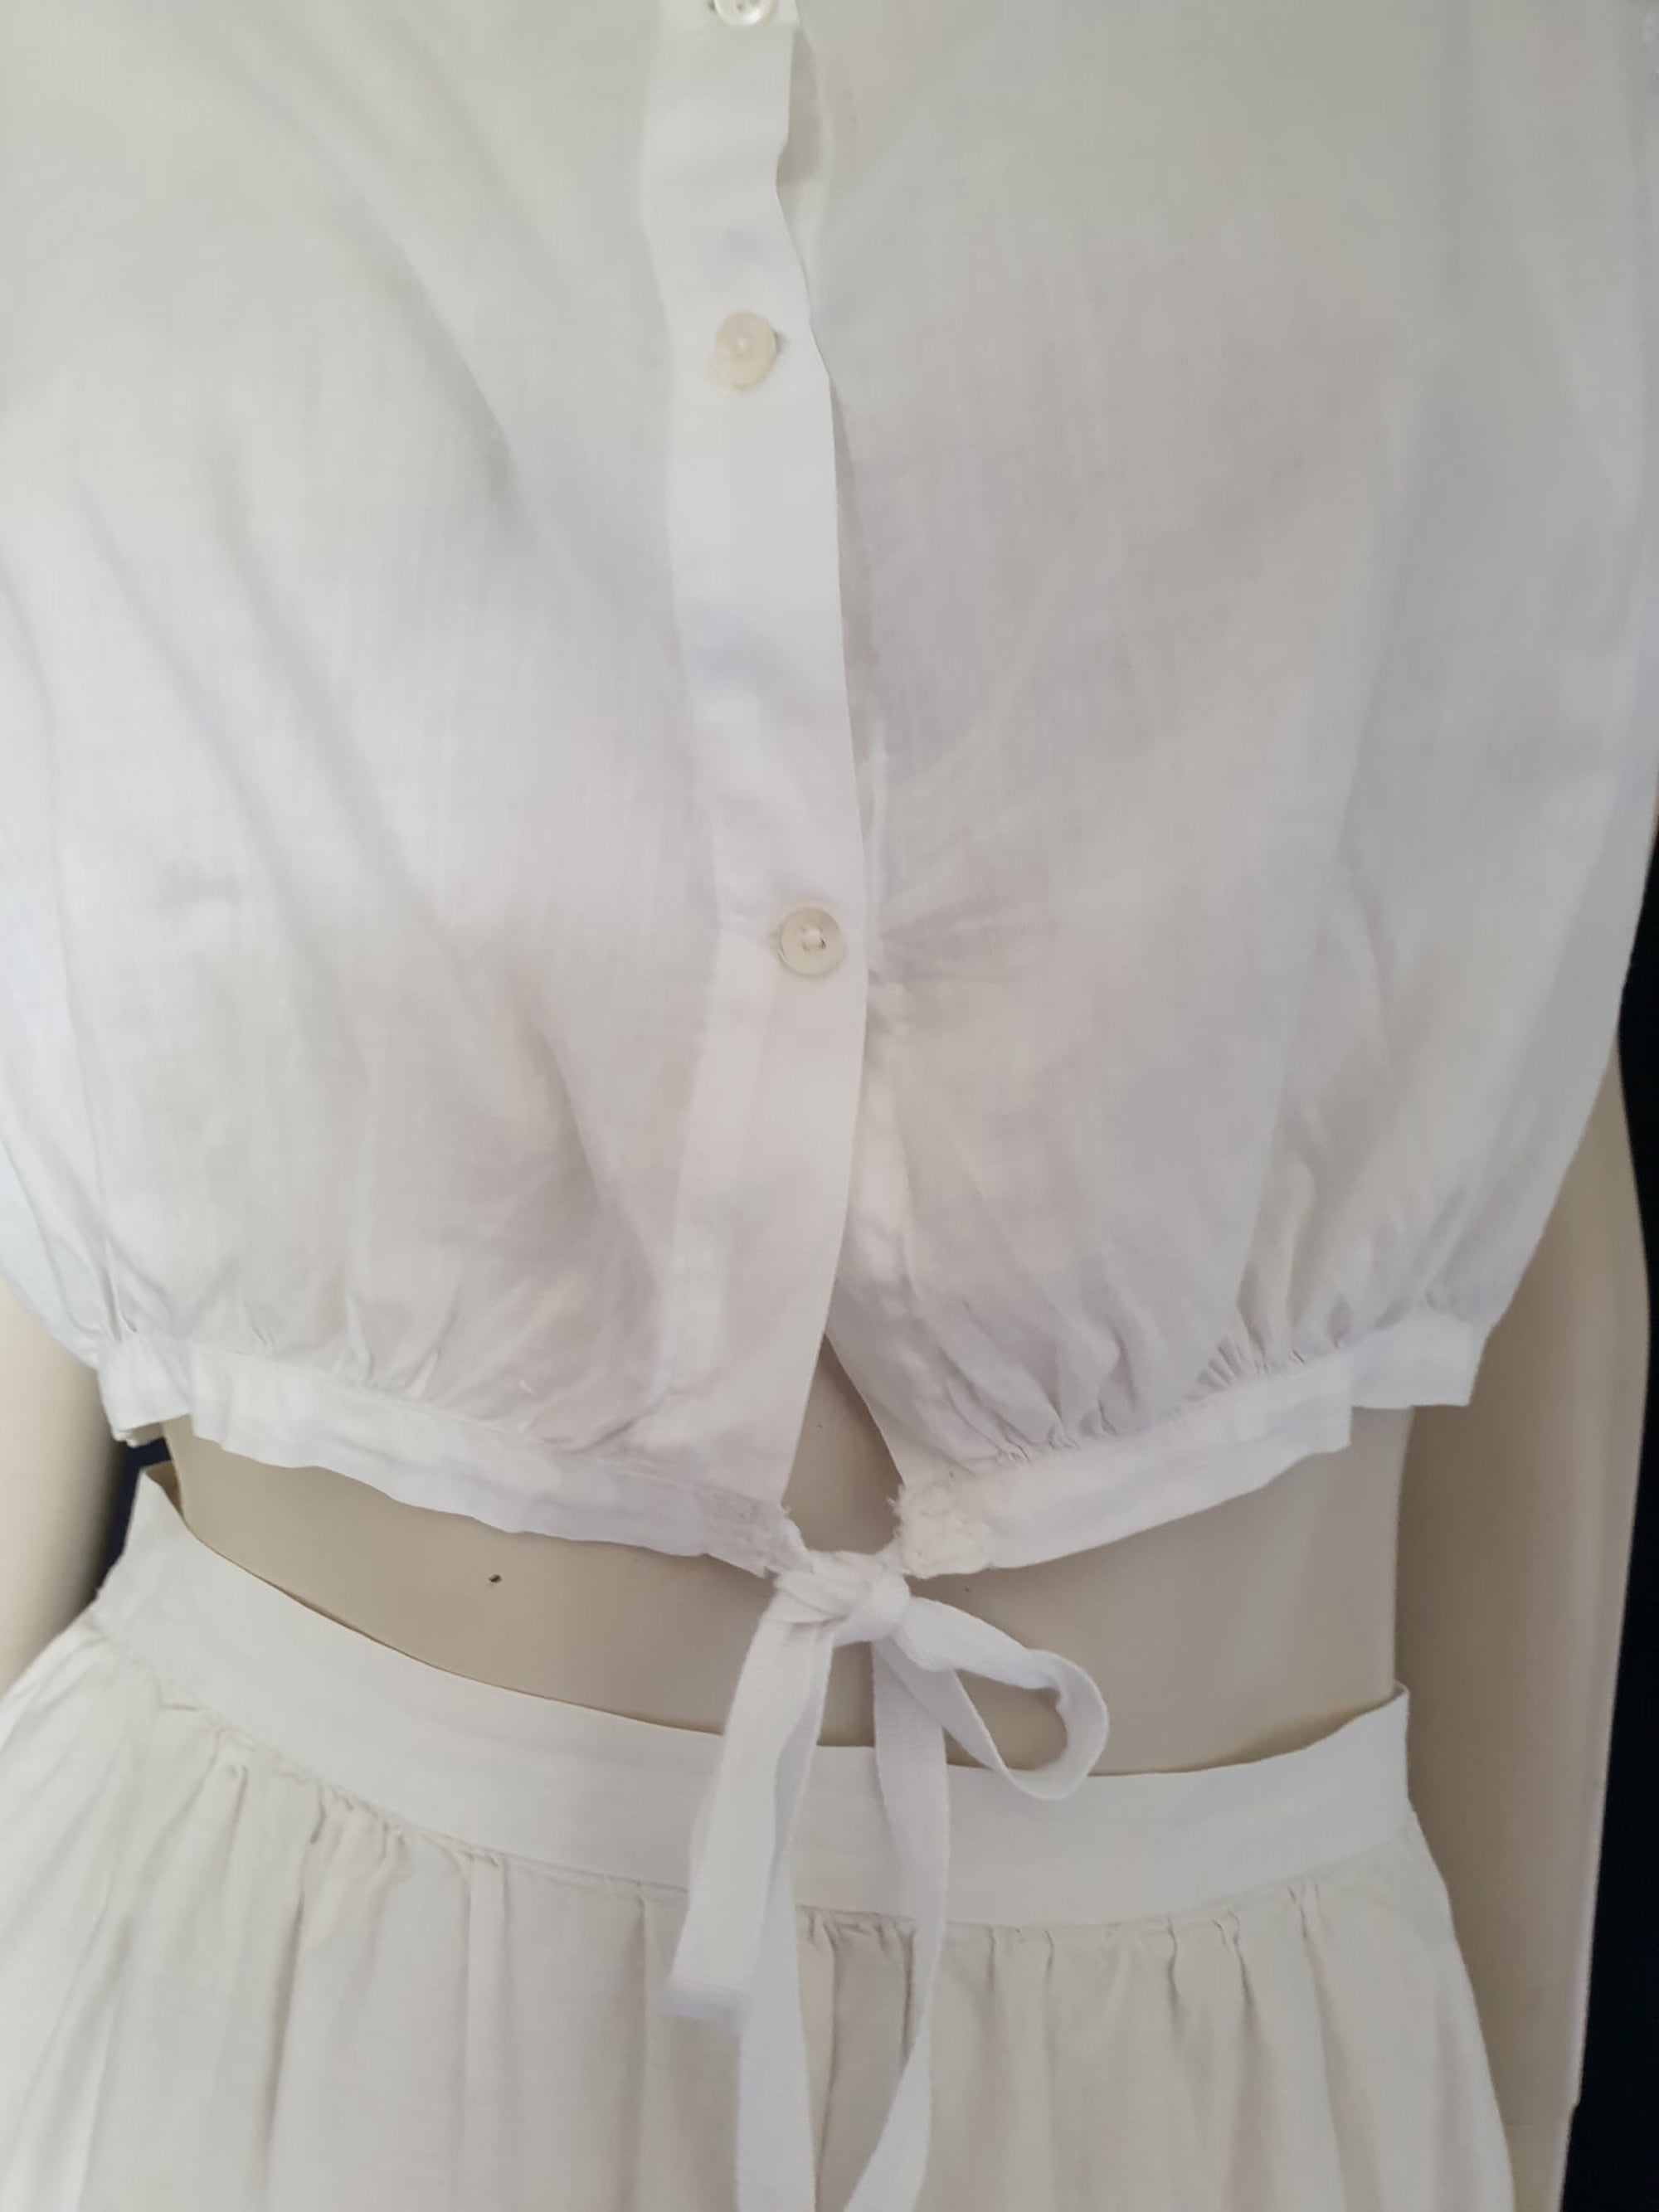 antique edwardian corset cover camisole broderie anglaise eyelet trim - Medium